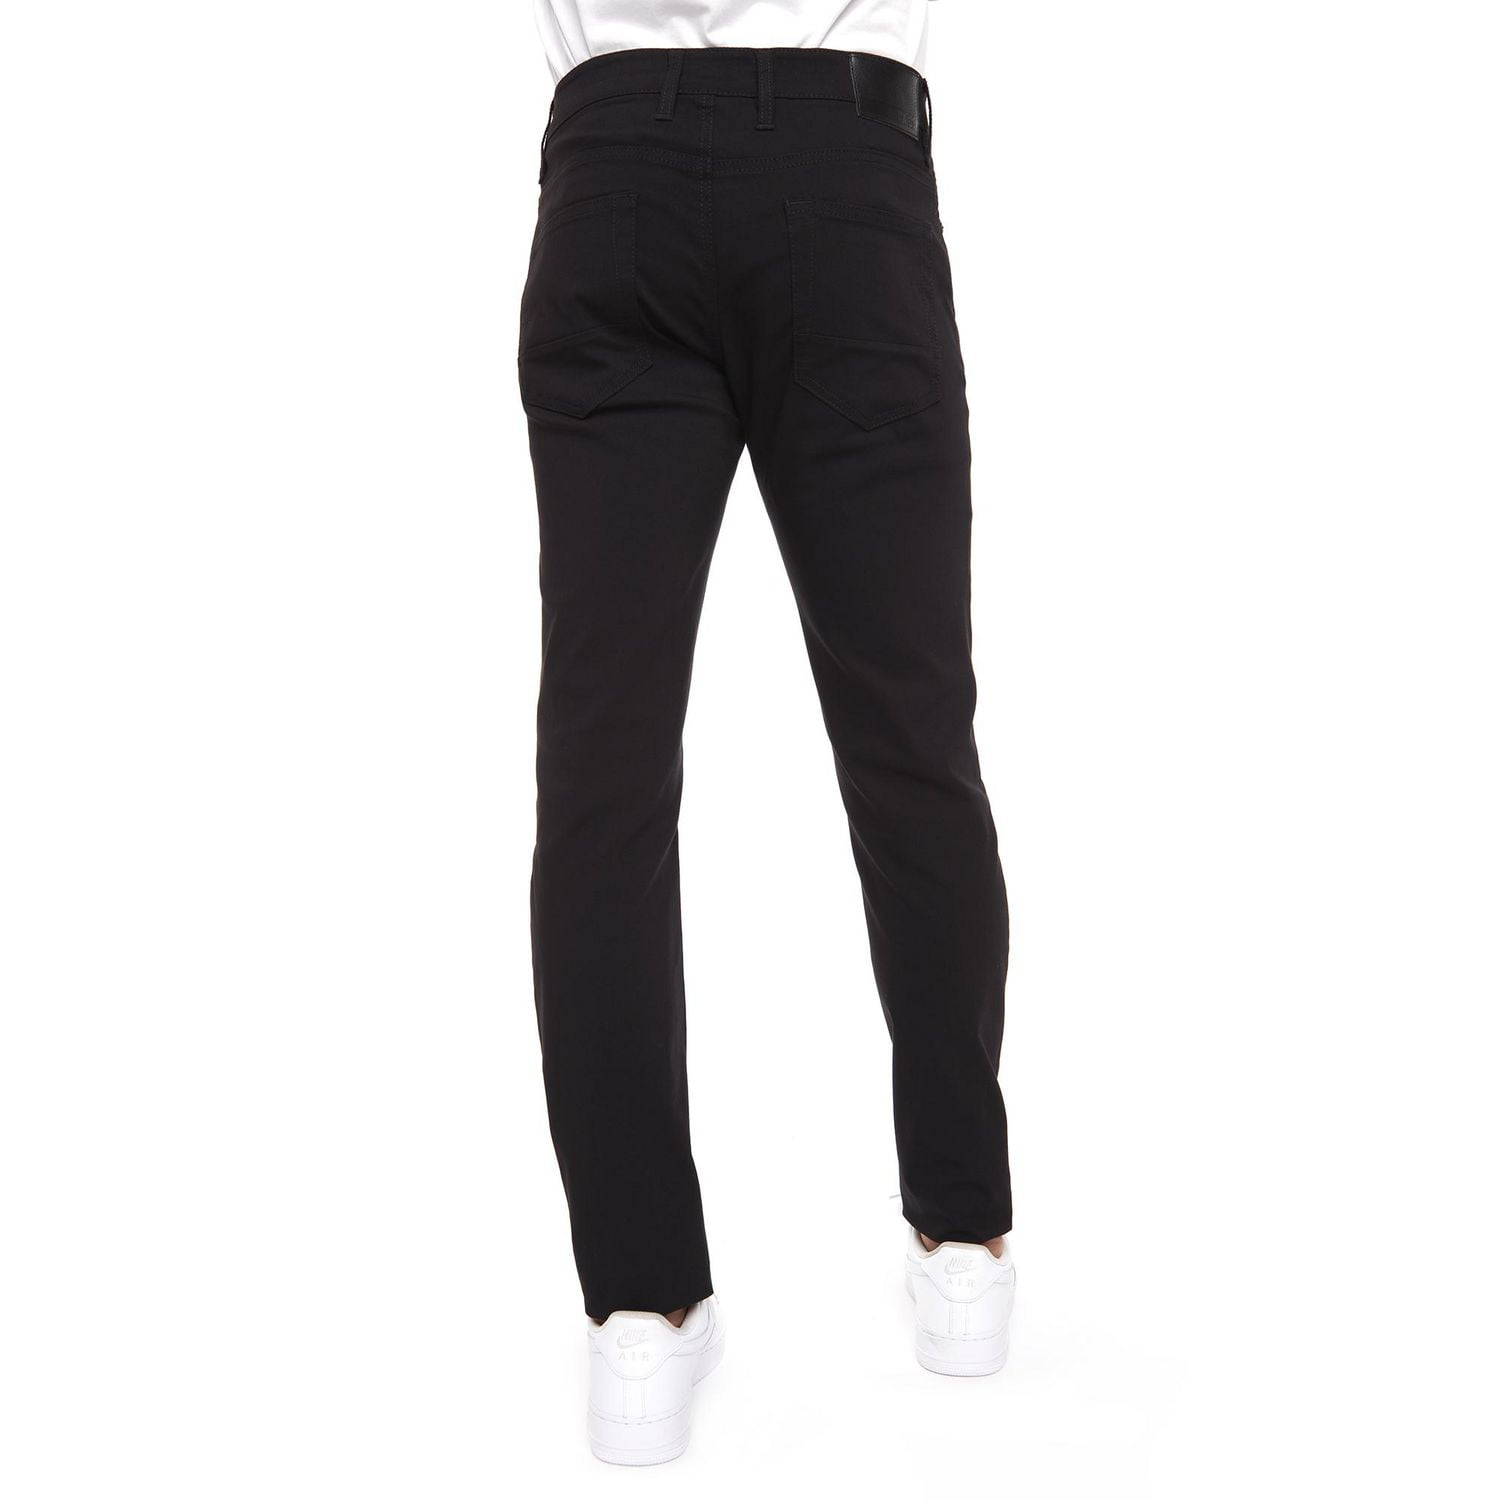 Jeans & Trousers, Black Stretchable Pants